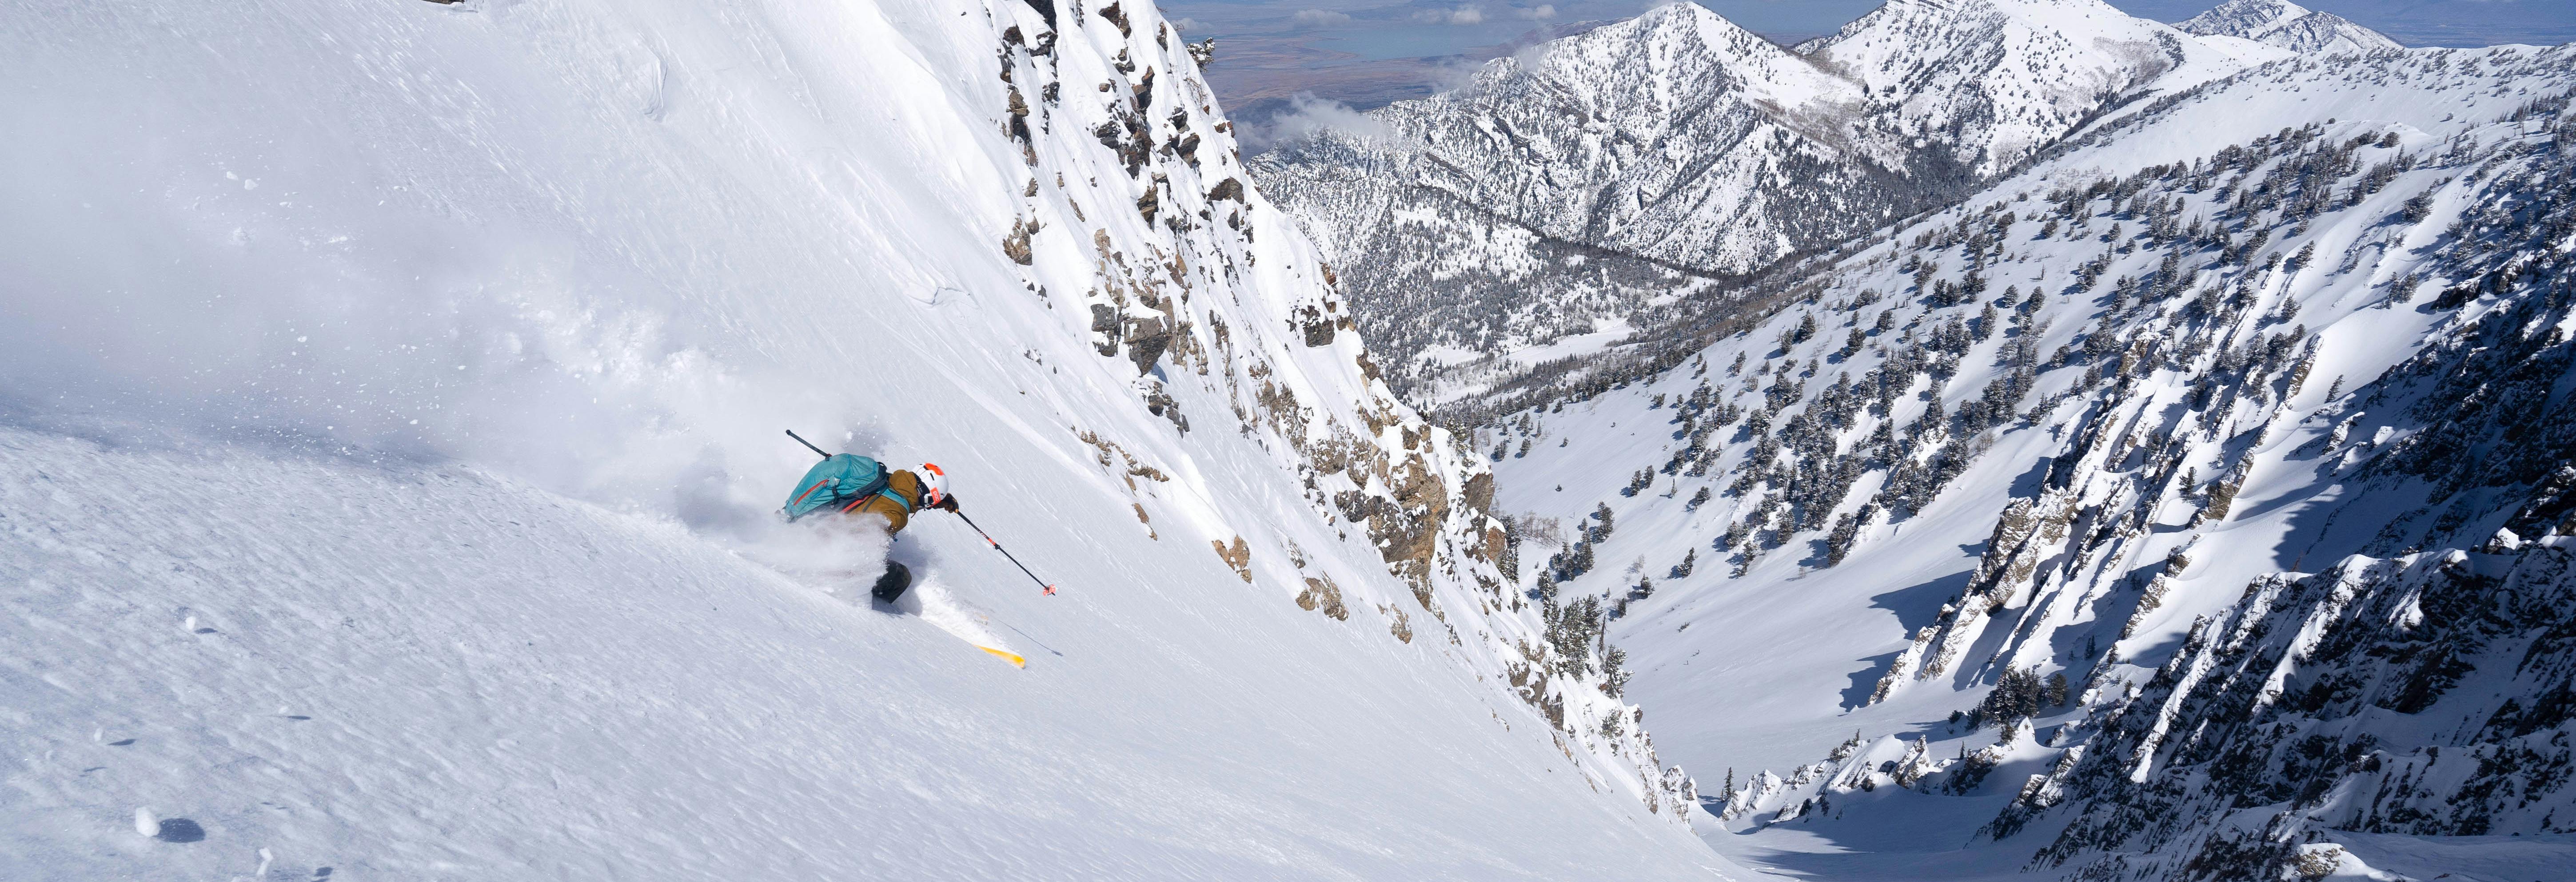 A man making a ski turn down a chute.